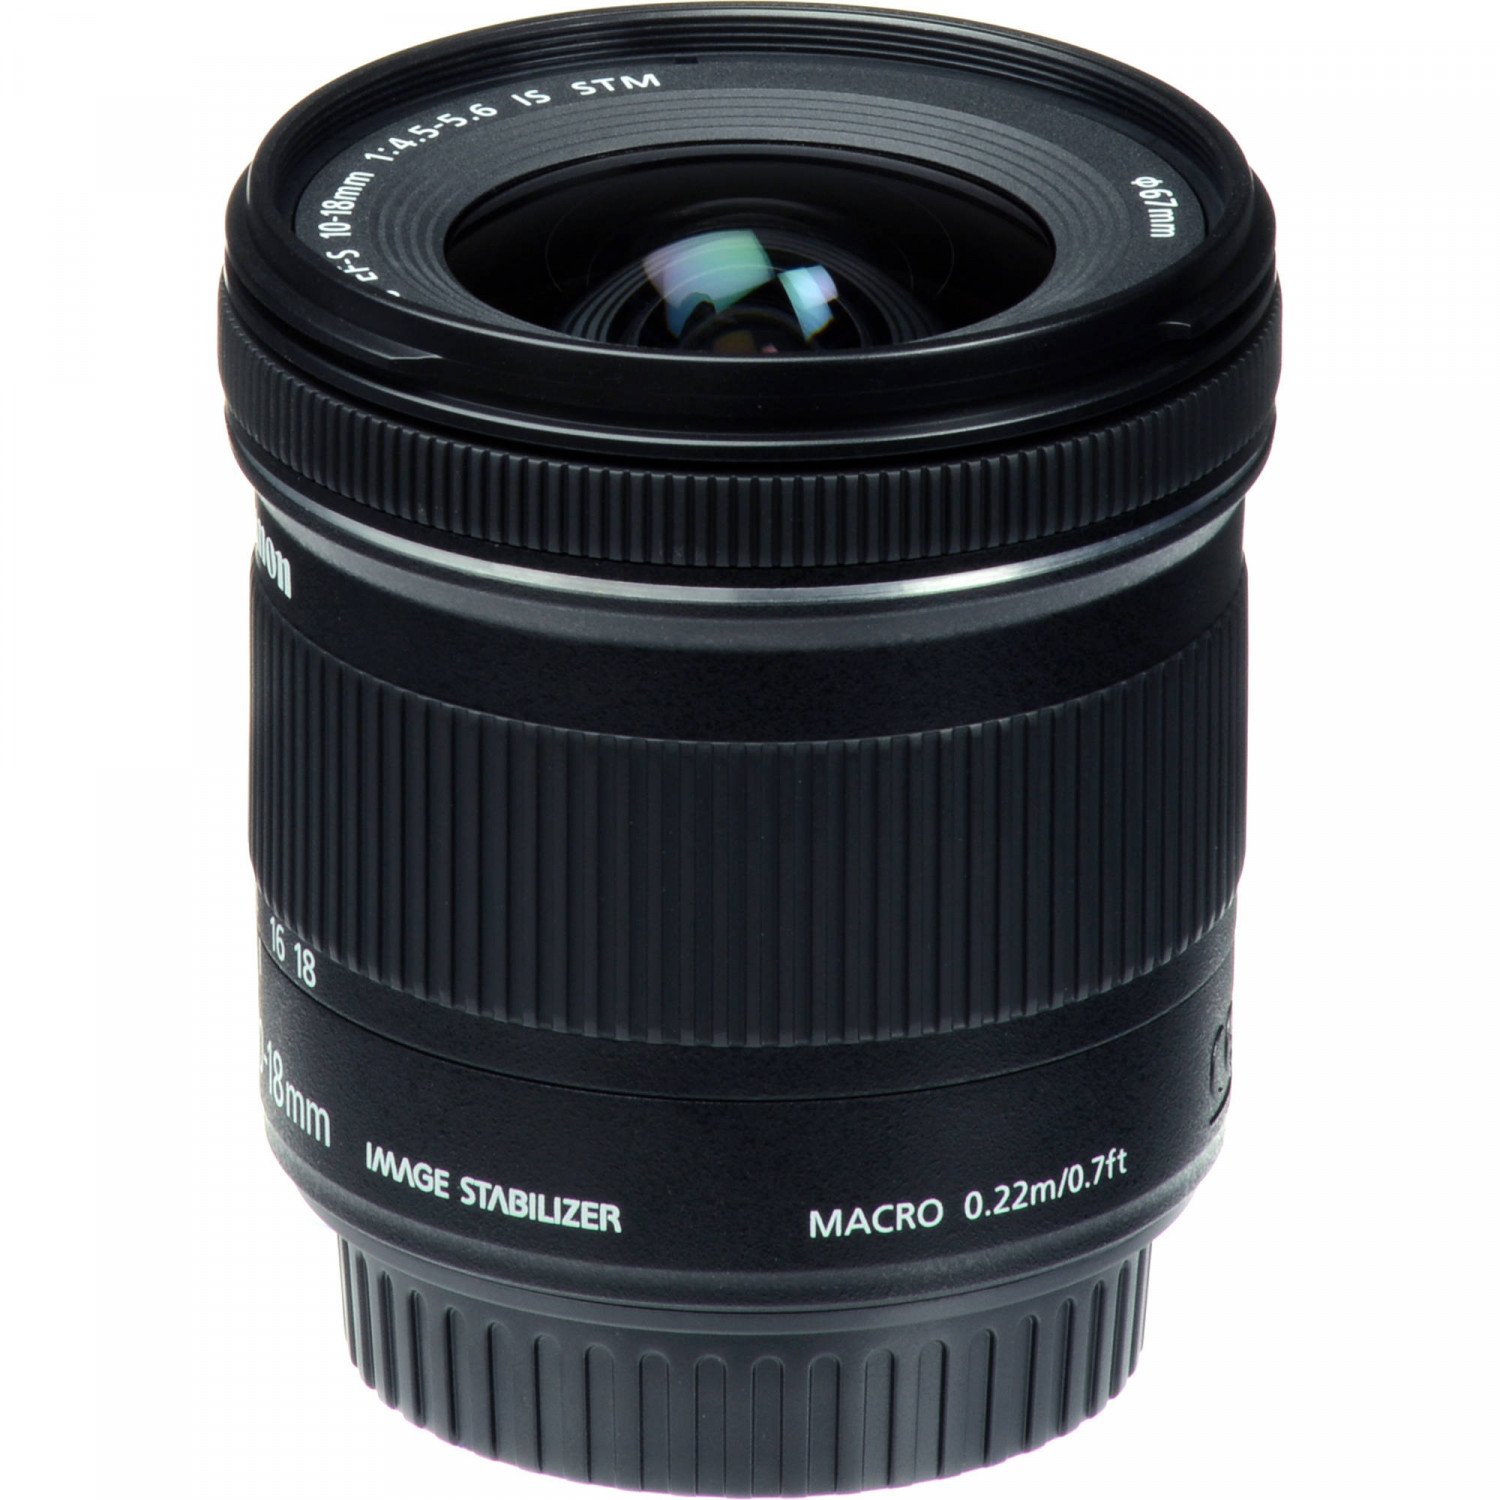 装着可能☆新品級美品Canon EF-S10-18mm F:4.5-5.6 IS STM